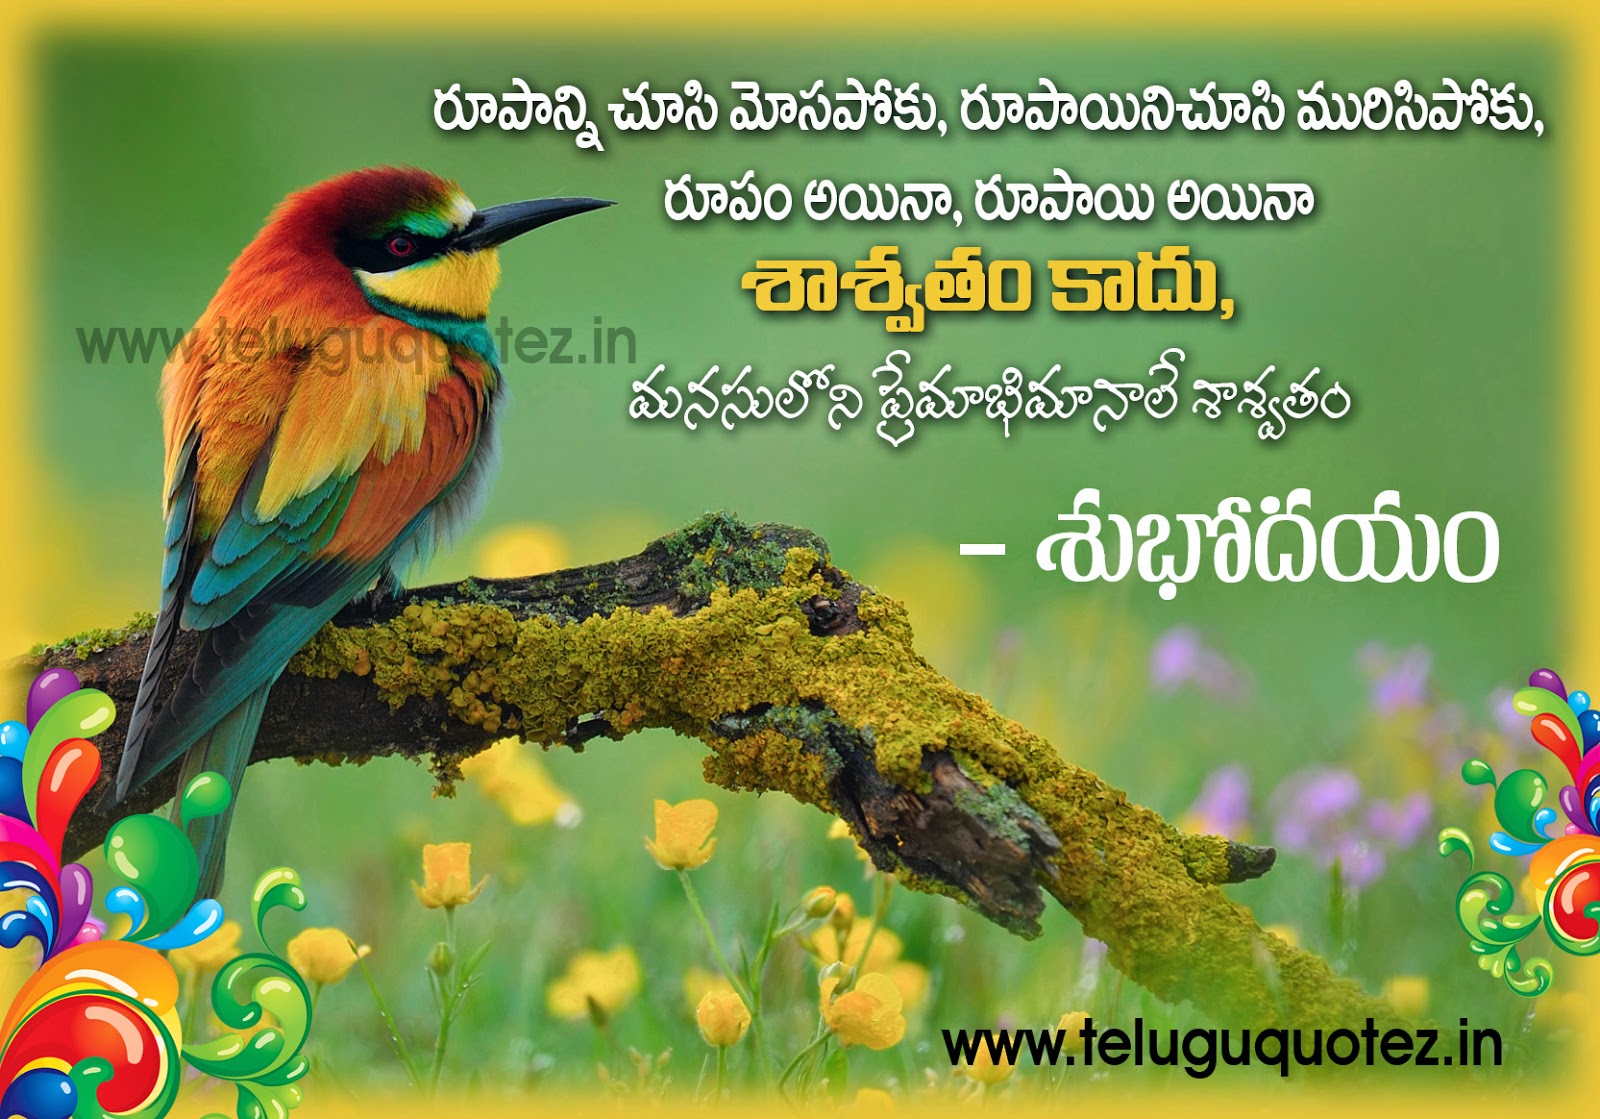 Good morning telugu quotes | naveengfx